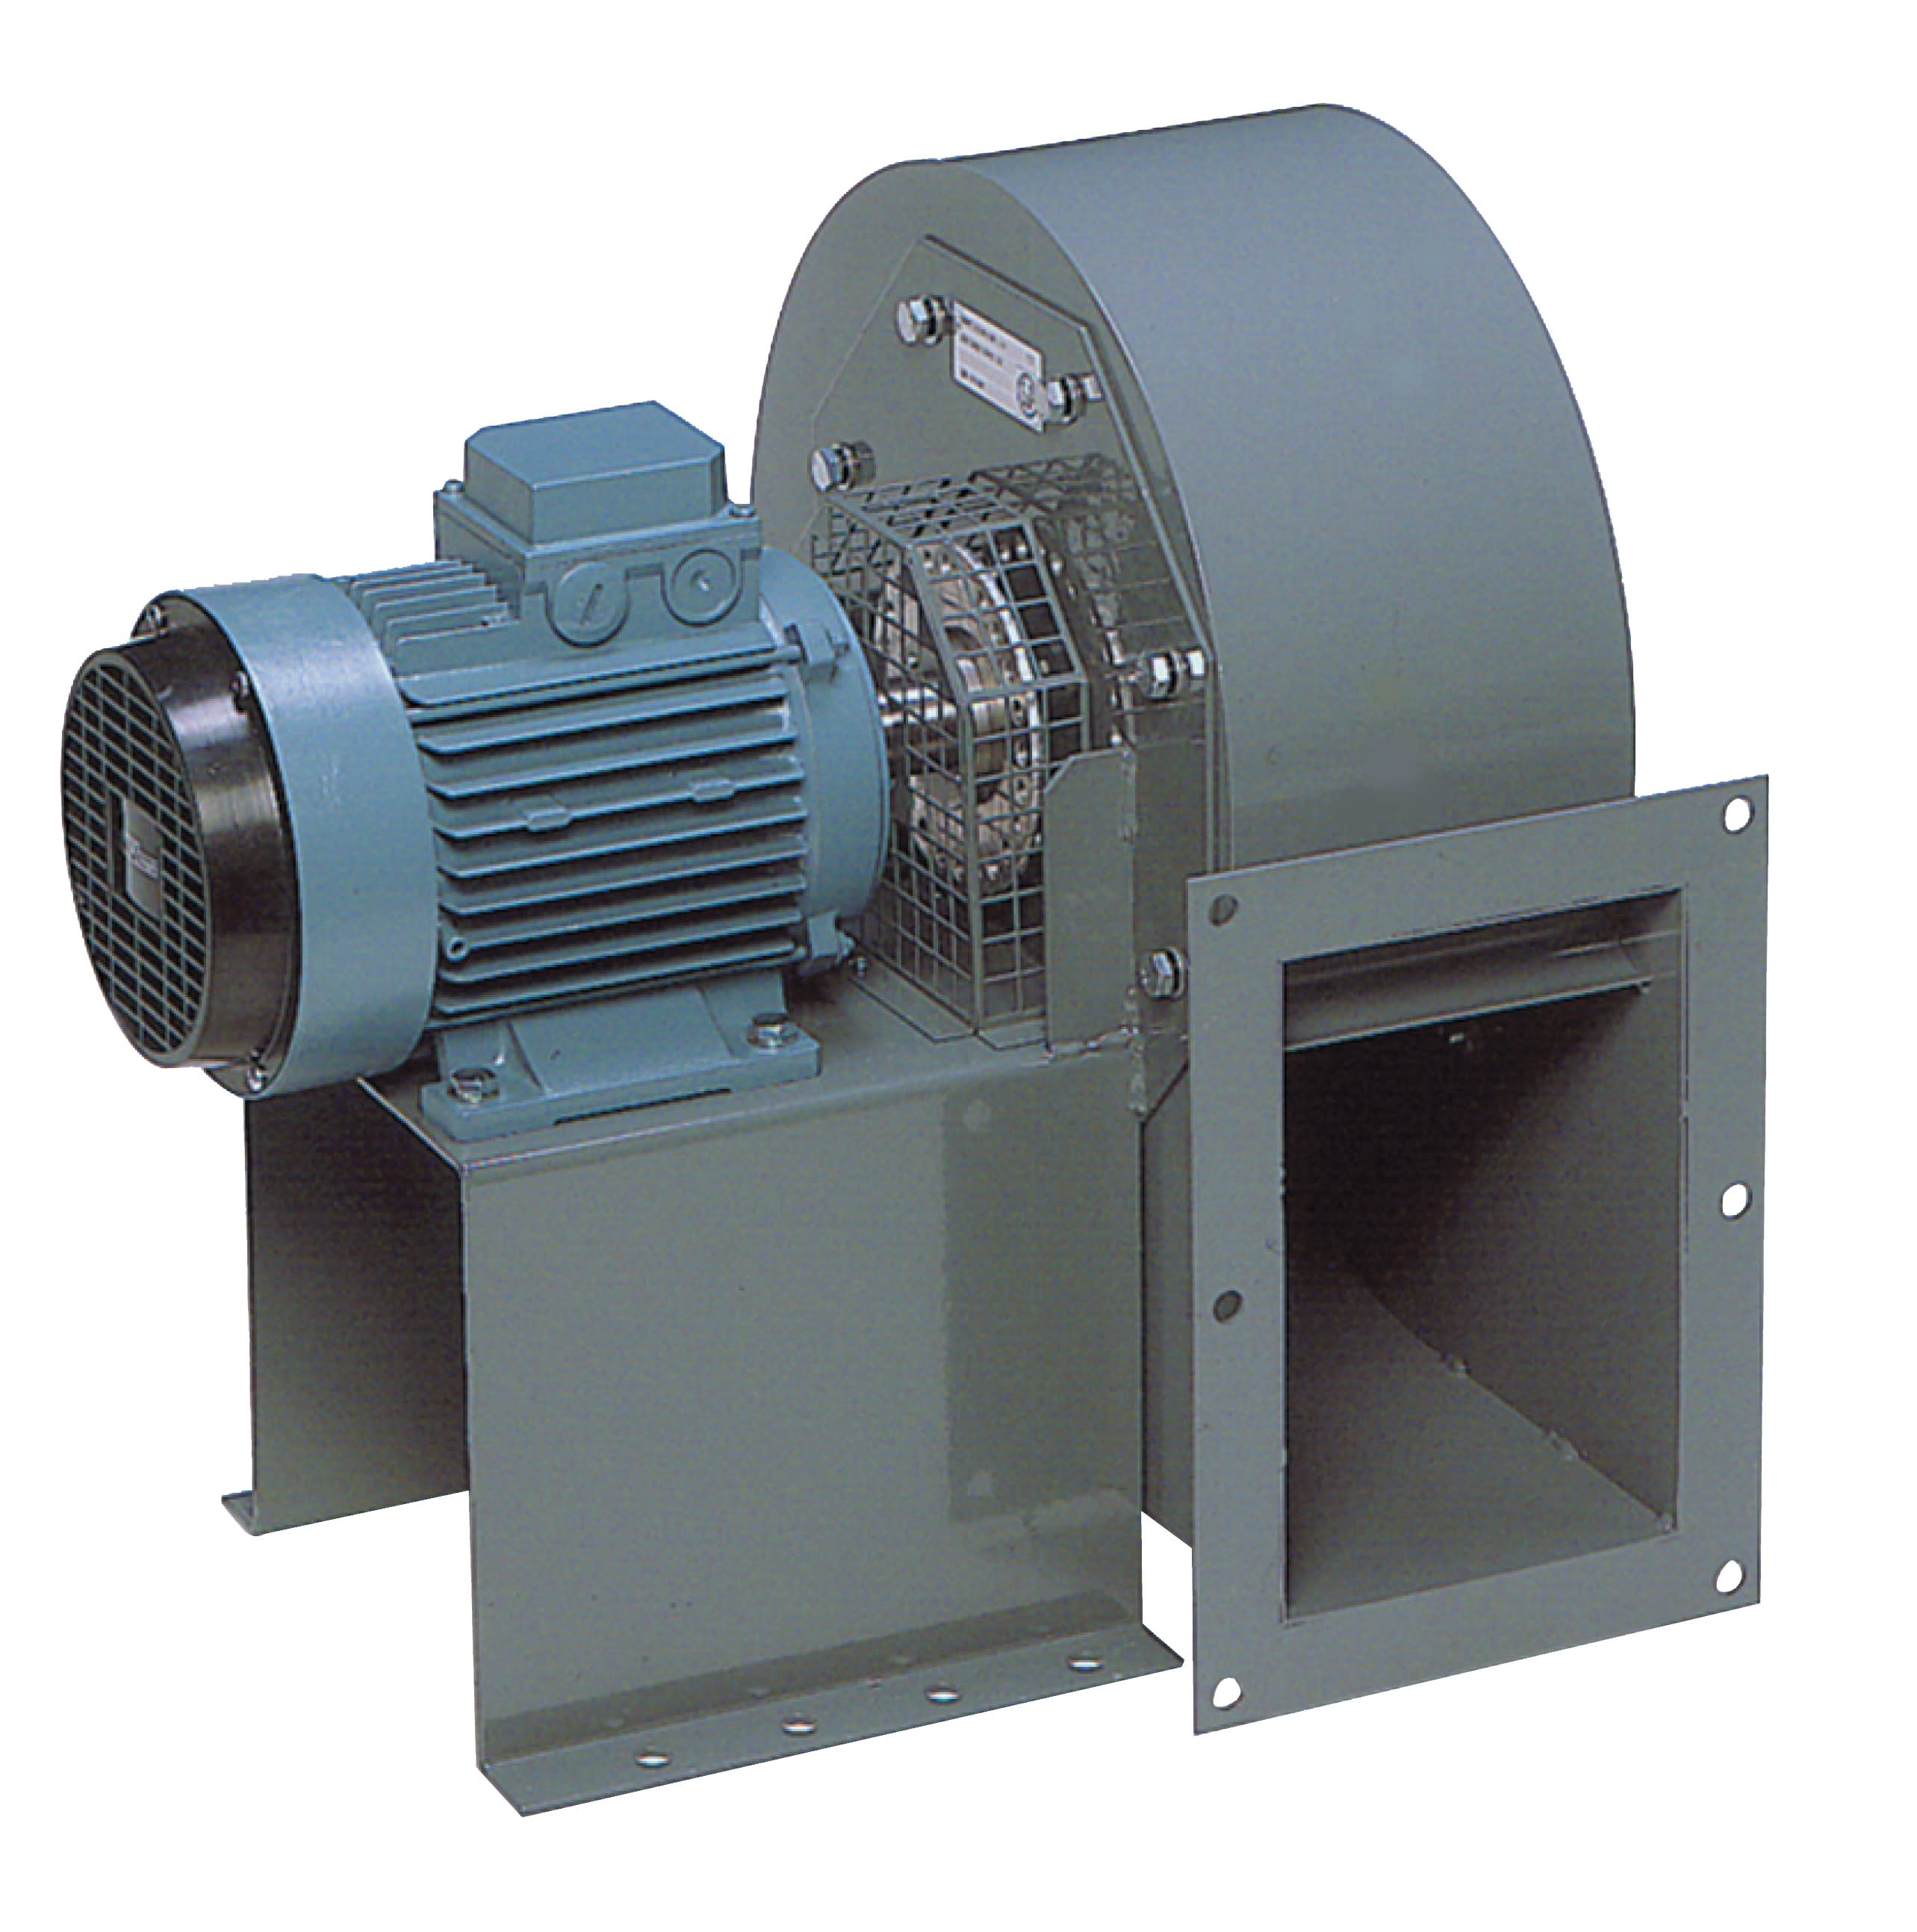 Ventilateur centrifuge haute température 300°C en continu, 6200 m3